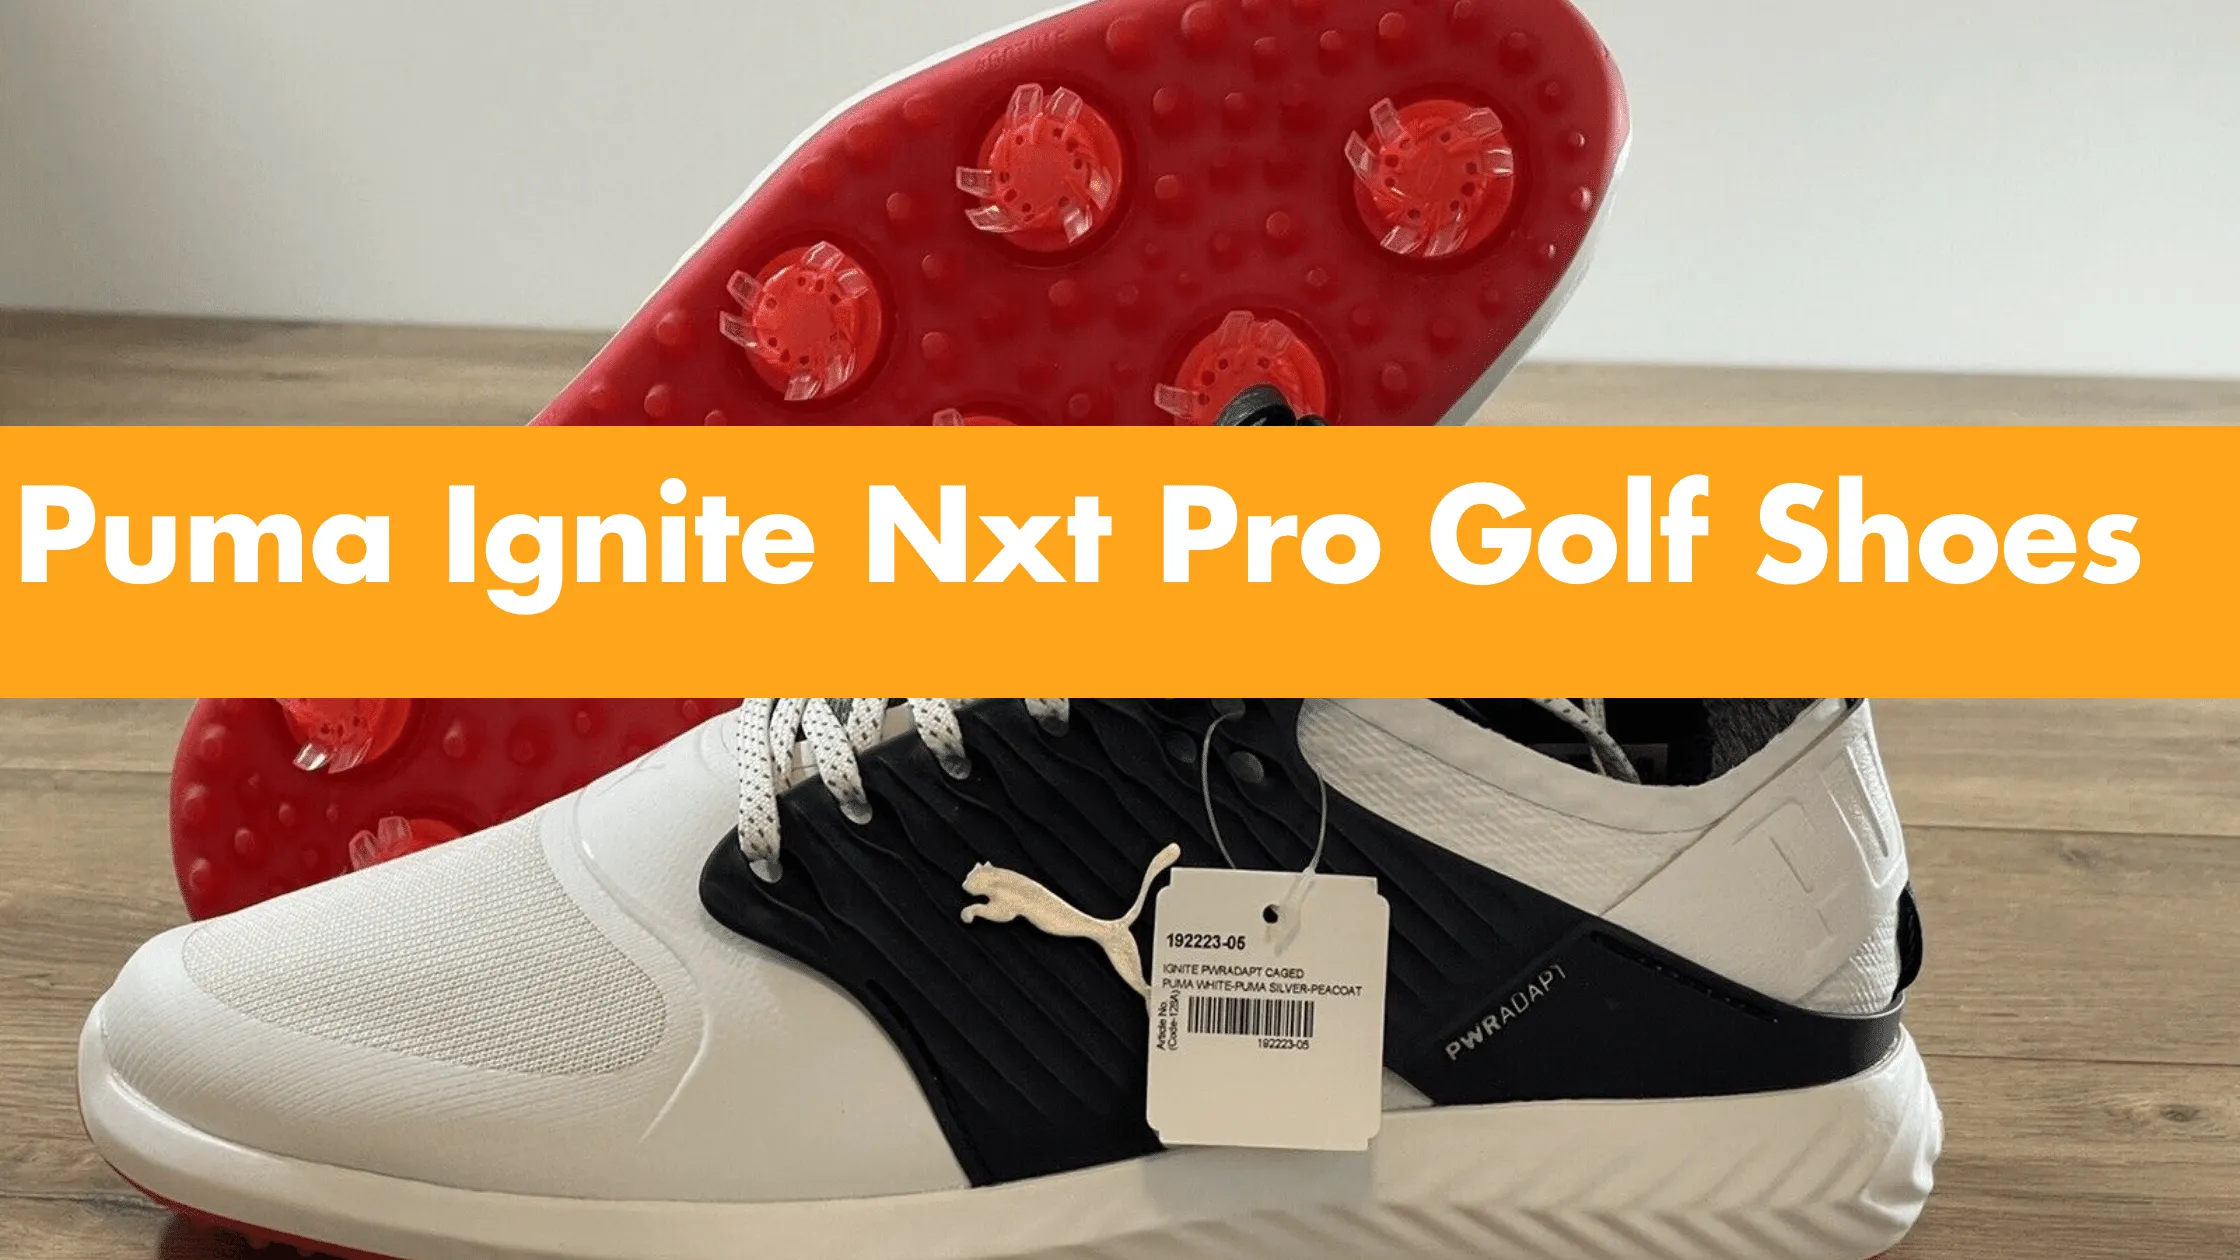 Puma Ignite Nxt Pro Golf Shoes